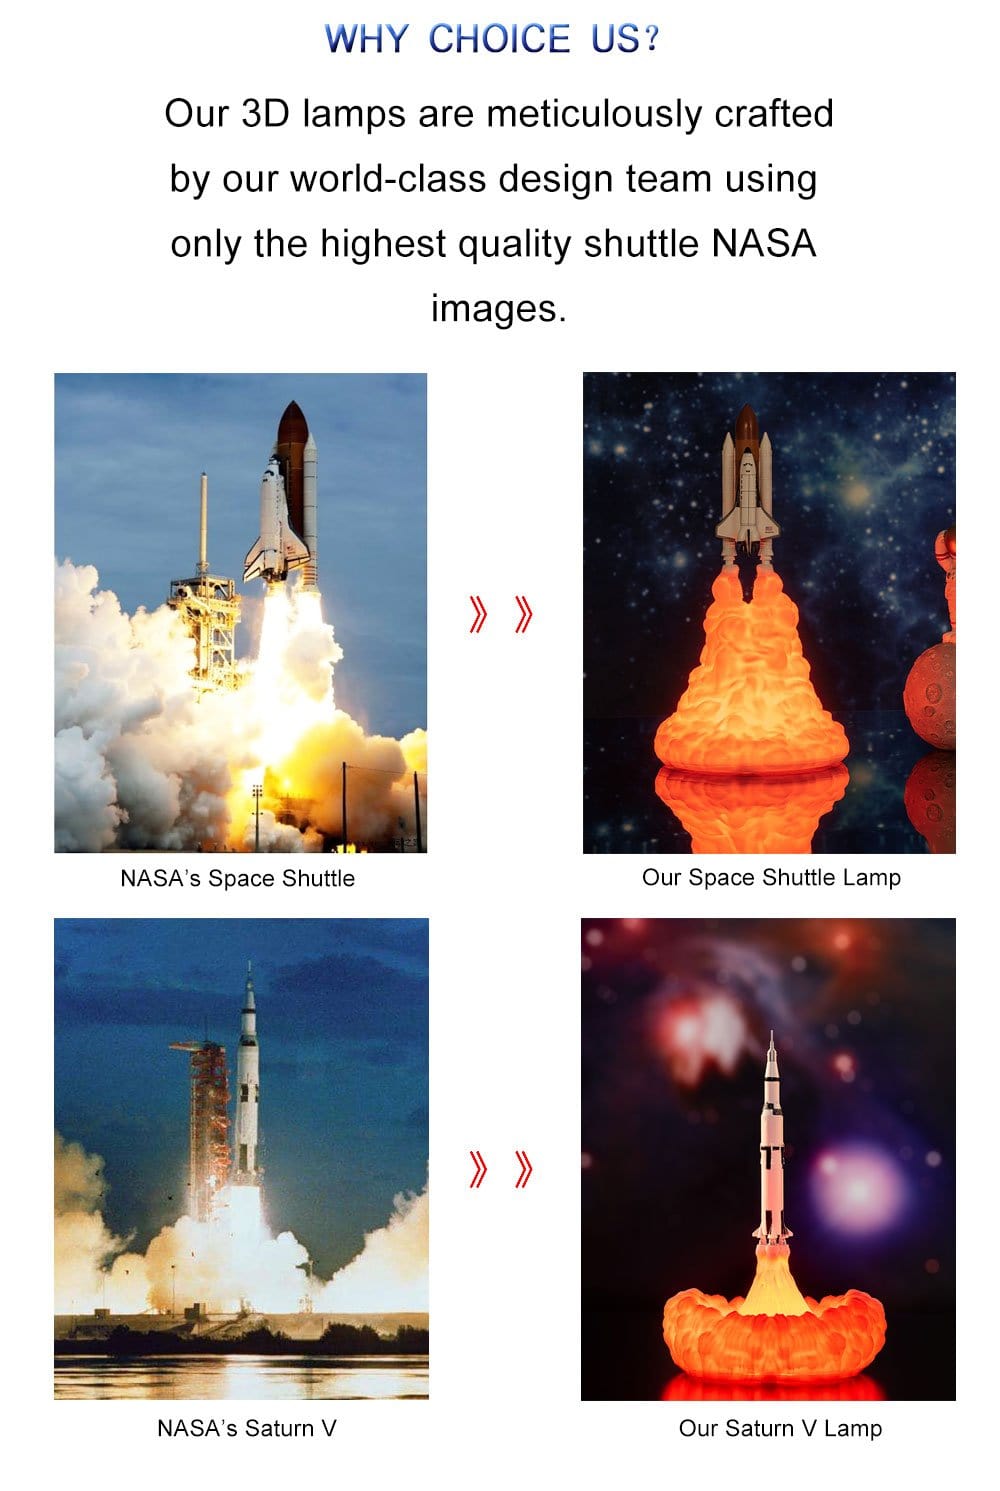 LED Lamp Space Shuttle Shot Up Night Light - 3D LED Rocket Lamp GiveMe-Gifts